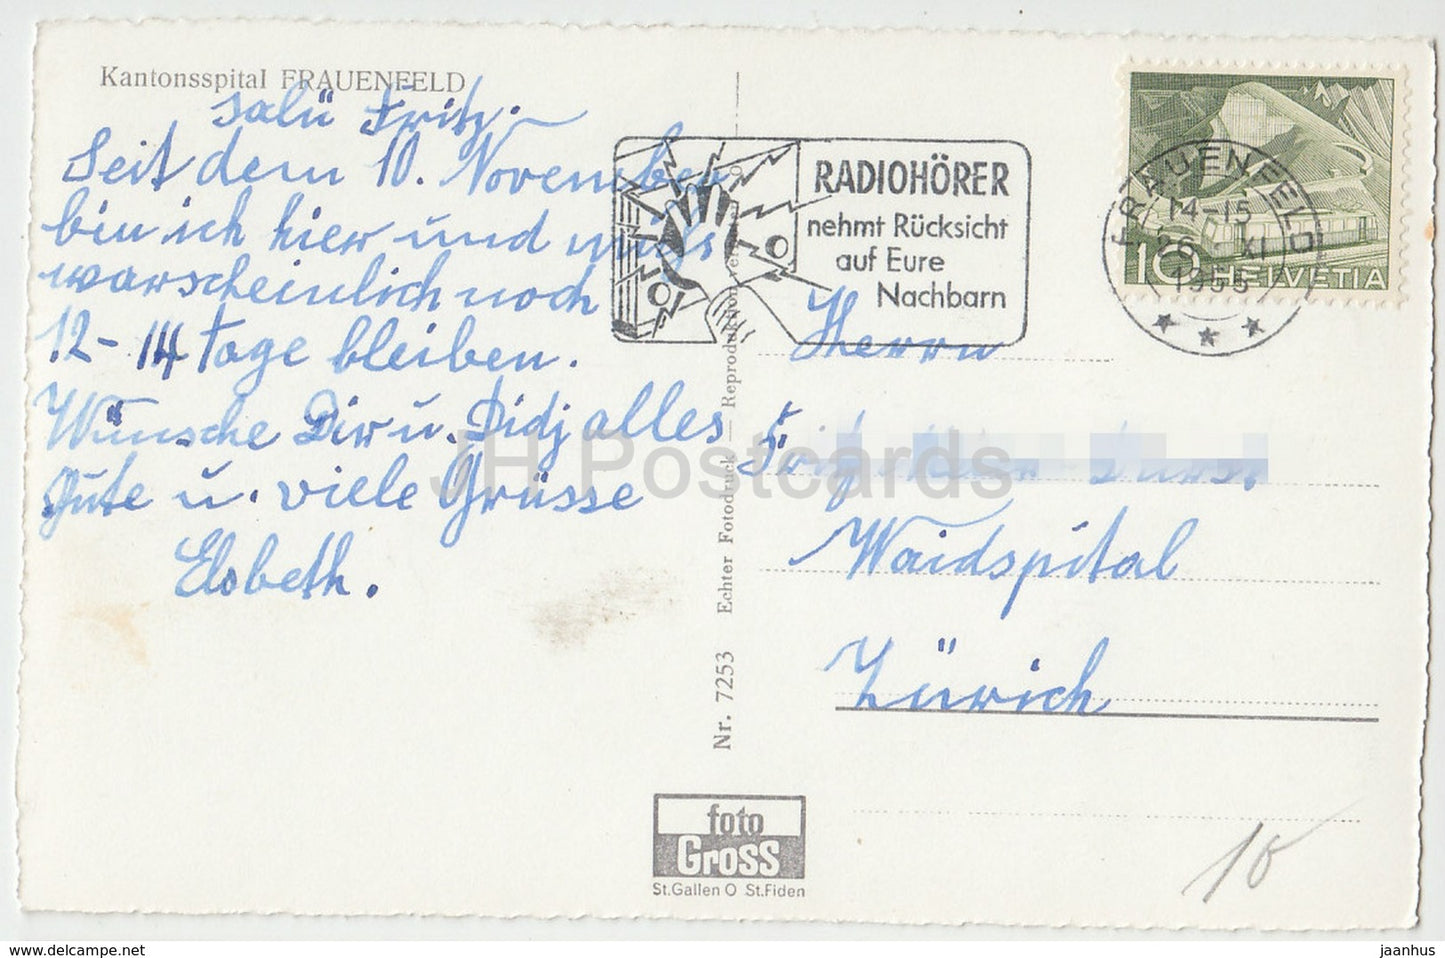 Frauenfeld - Spital - Kantonsspital - 7253 - 1955 - Suisse - d'occasion